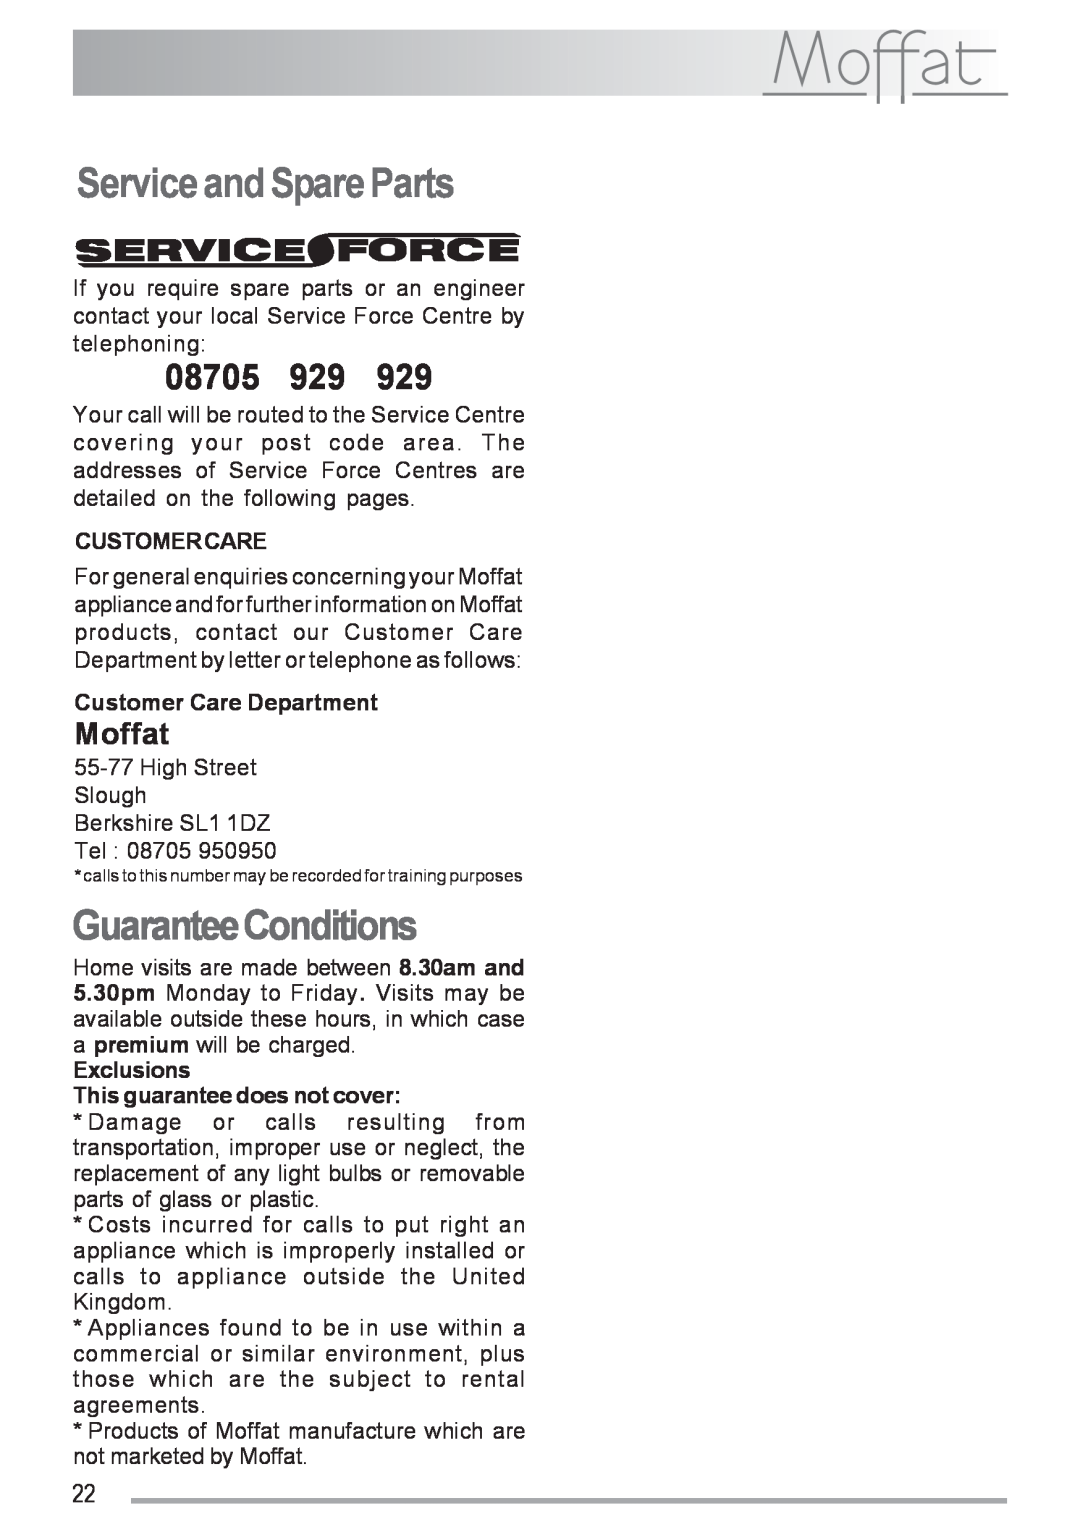 Moffat MSF 616 manual Service and Spare Parts, GuaranteeConditions, 08705, Moffat, Customercare, Customer Care Department 